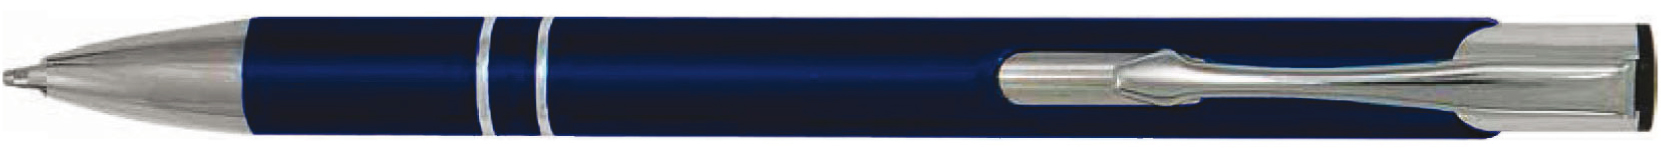 BestPen - metal promotional pen with engraving C-24